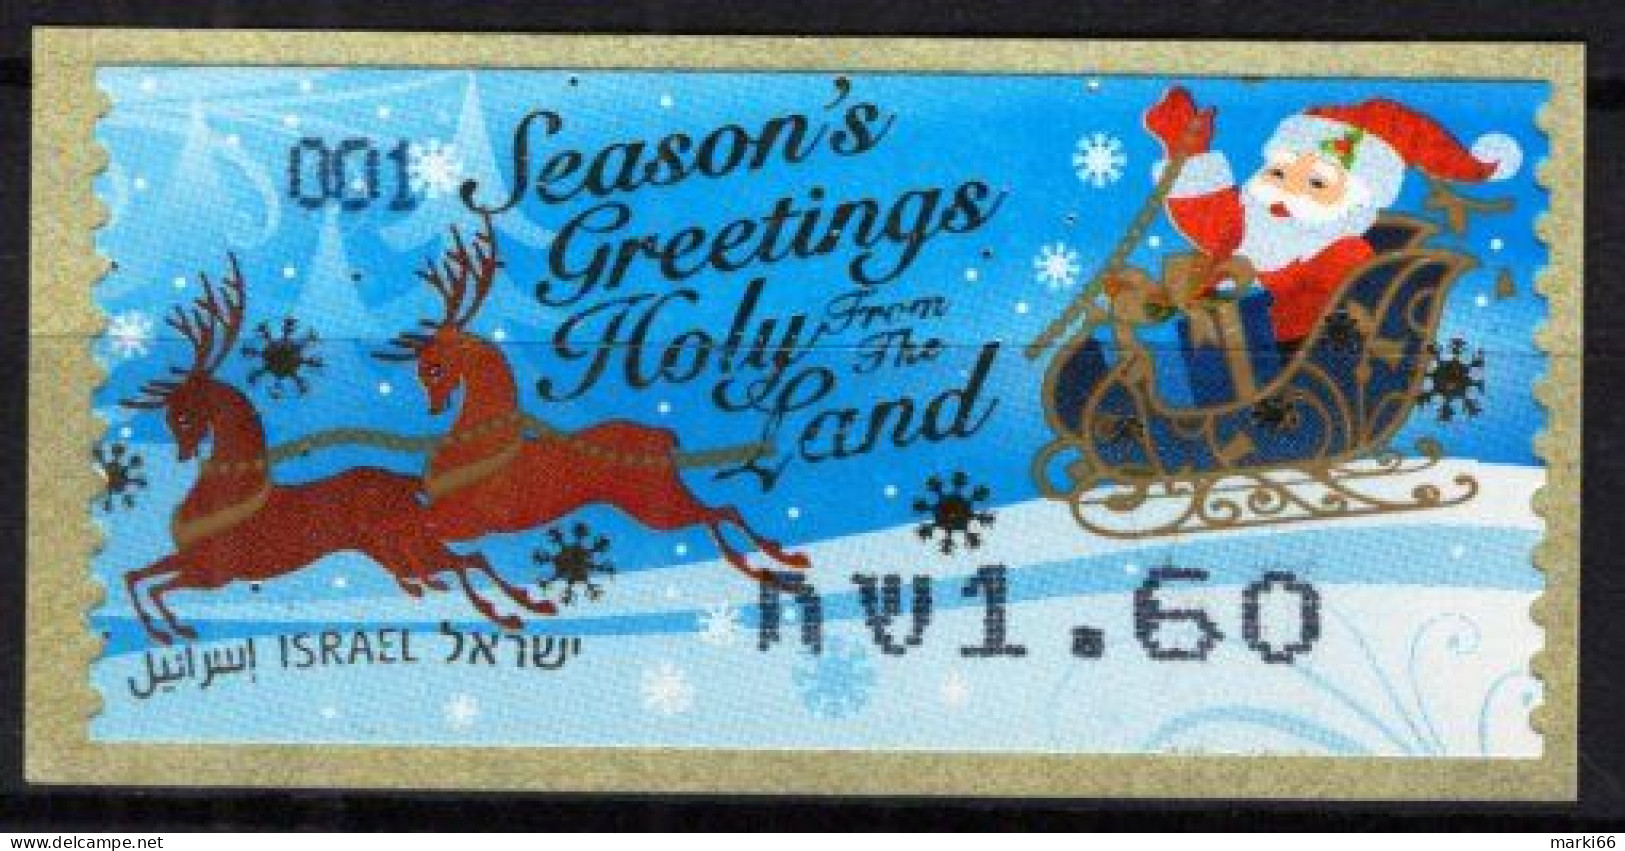 Israel - 2009 - Season's Greetings From Holy Land - Mint ATM Stamp - Vignettes D'affranchissement (Frama)